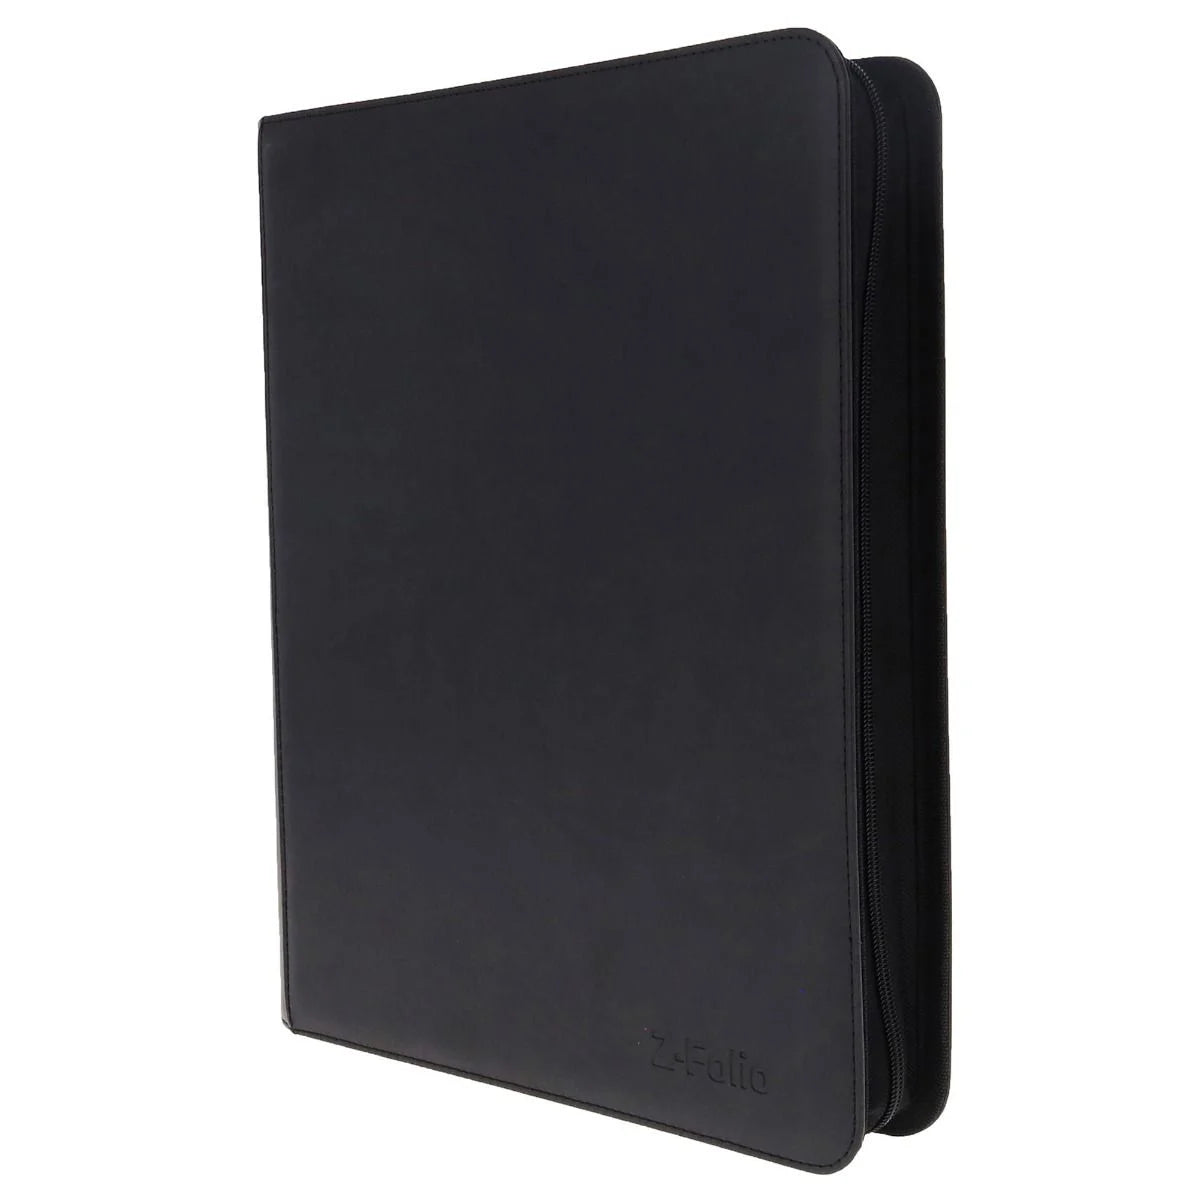 BCW - Z-Folio 9-Pocket LX Album - Toploaders - Black